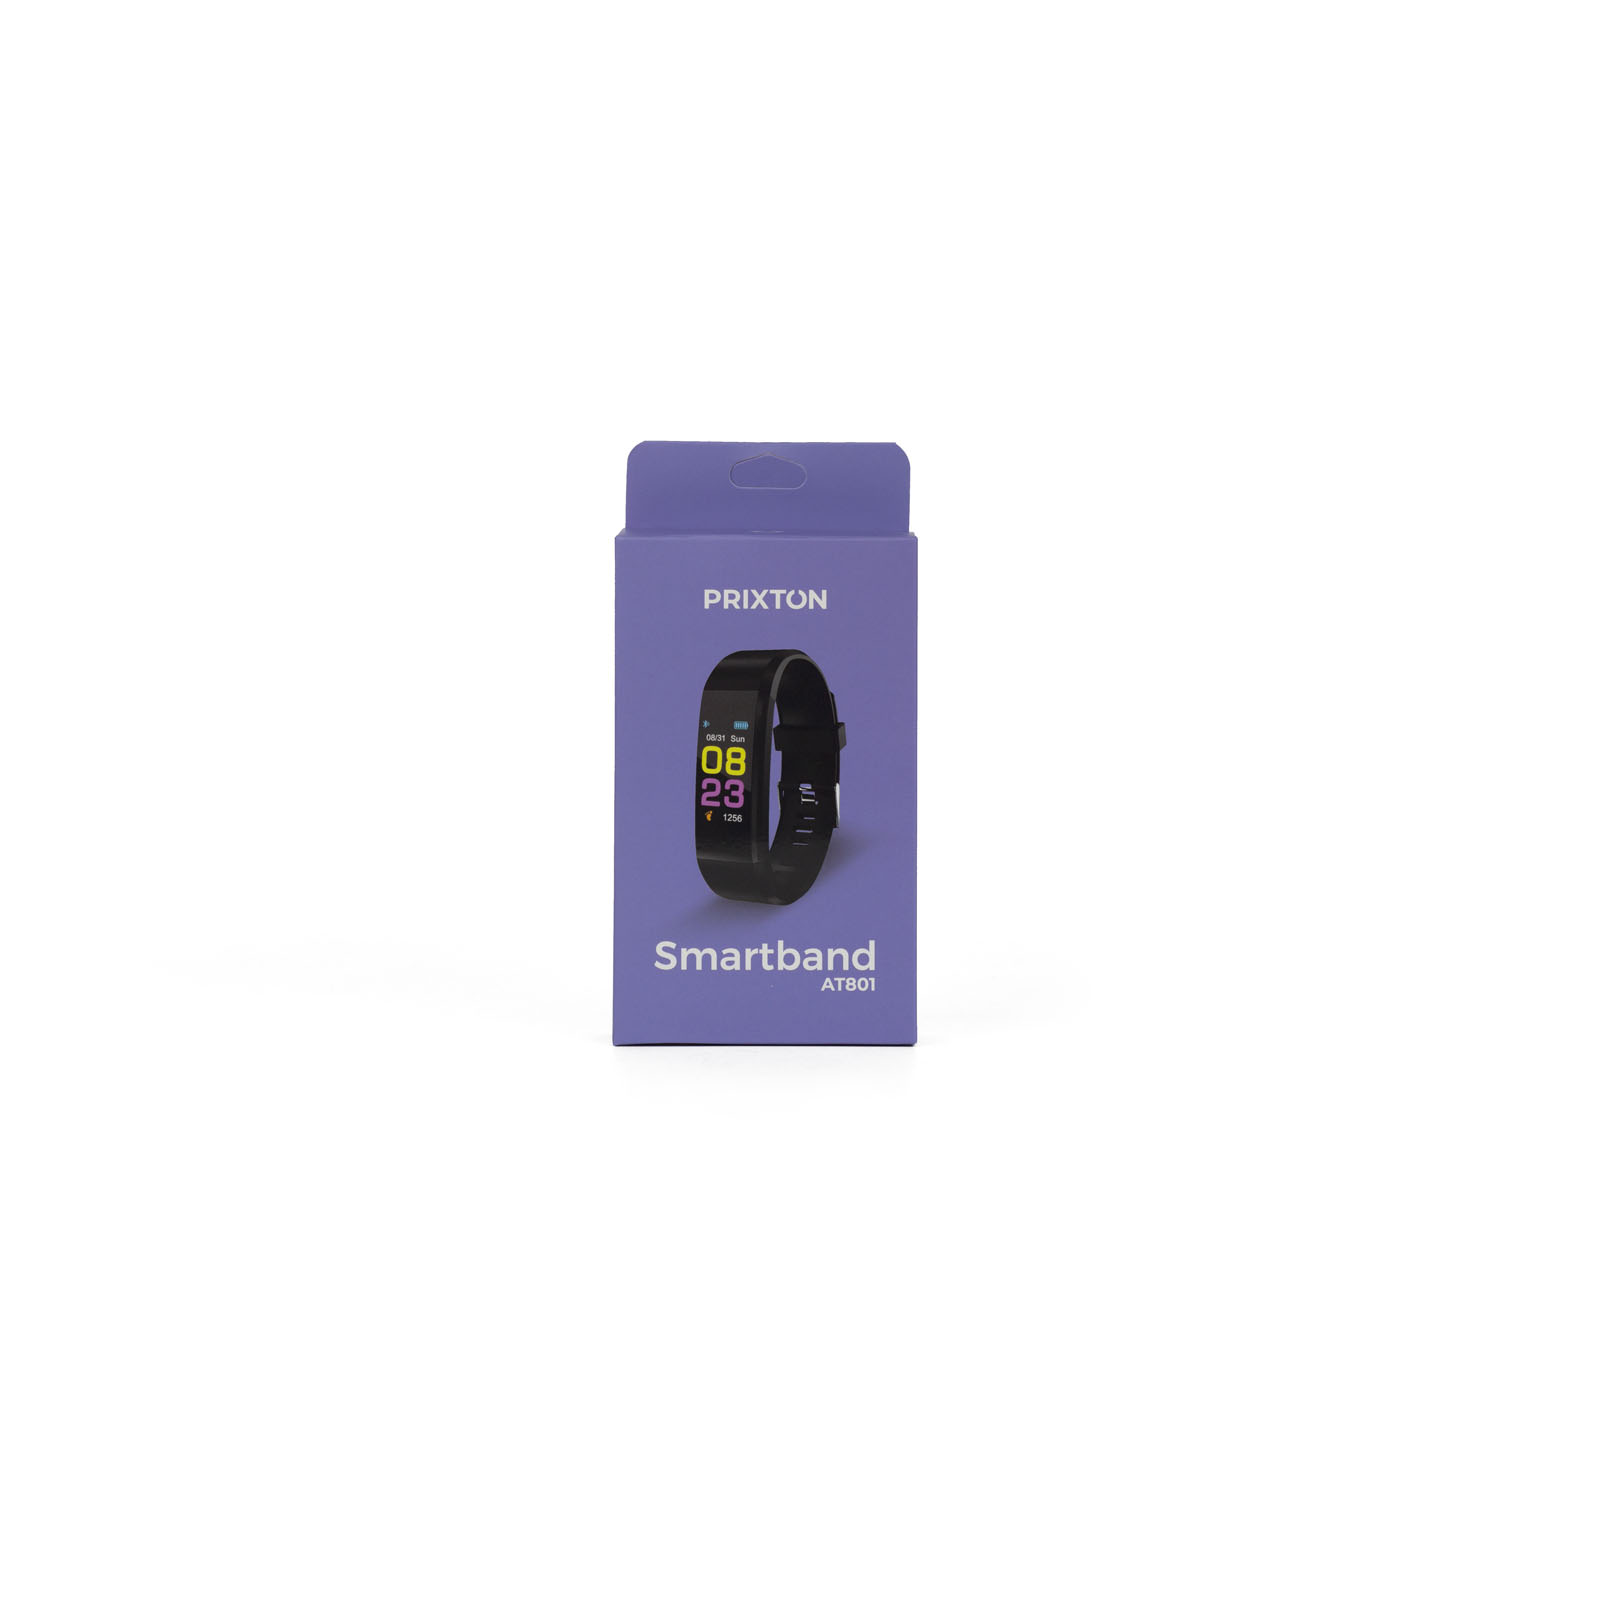 Advertising Smartwatches - Prixton smartband AT801 - 1